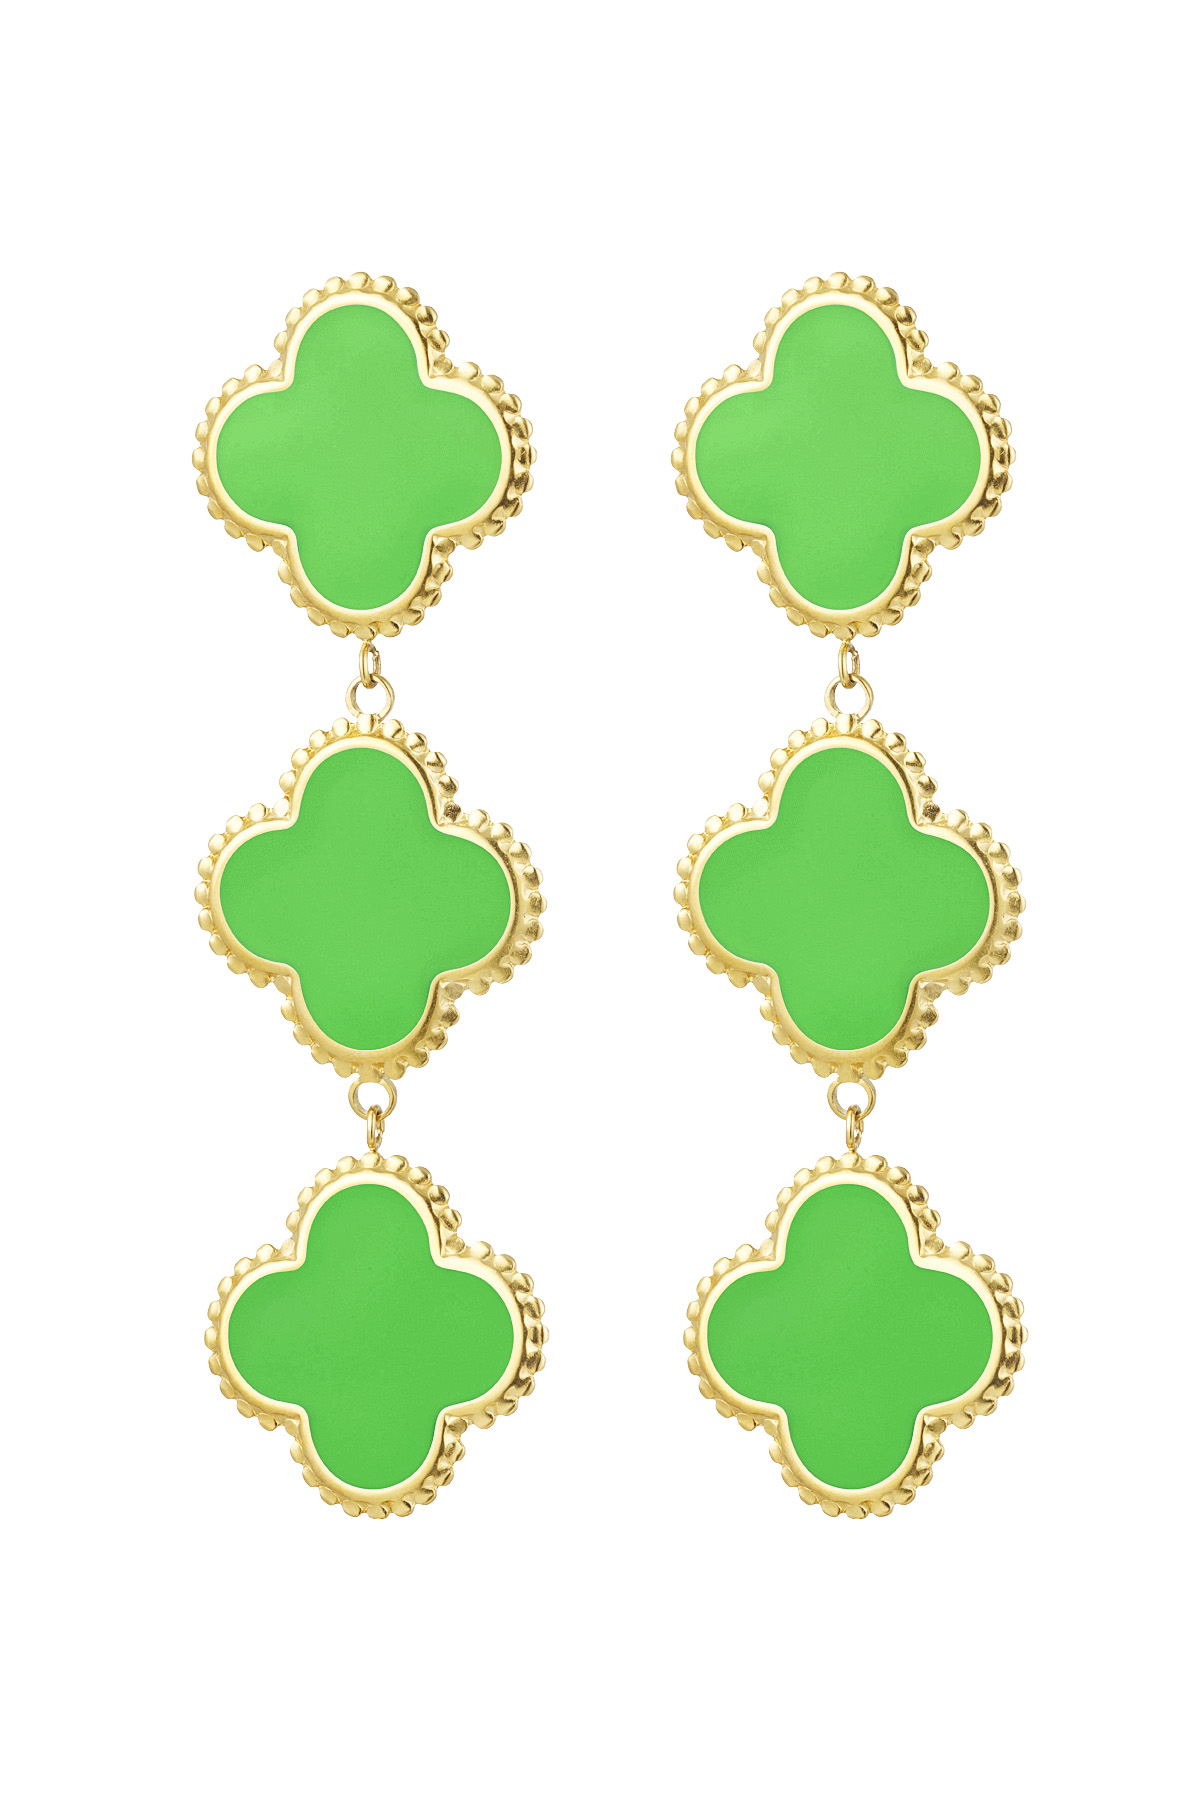 Earrings 3 clovers - green Stainless Steel